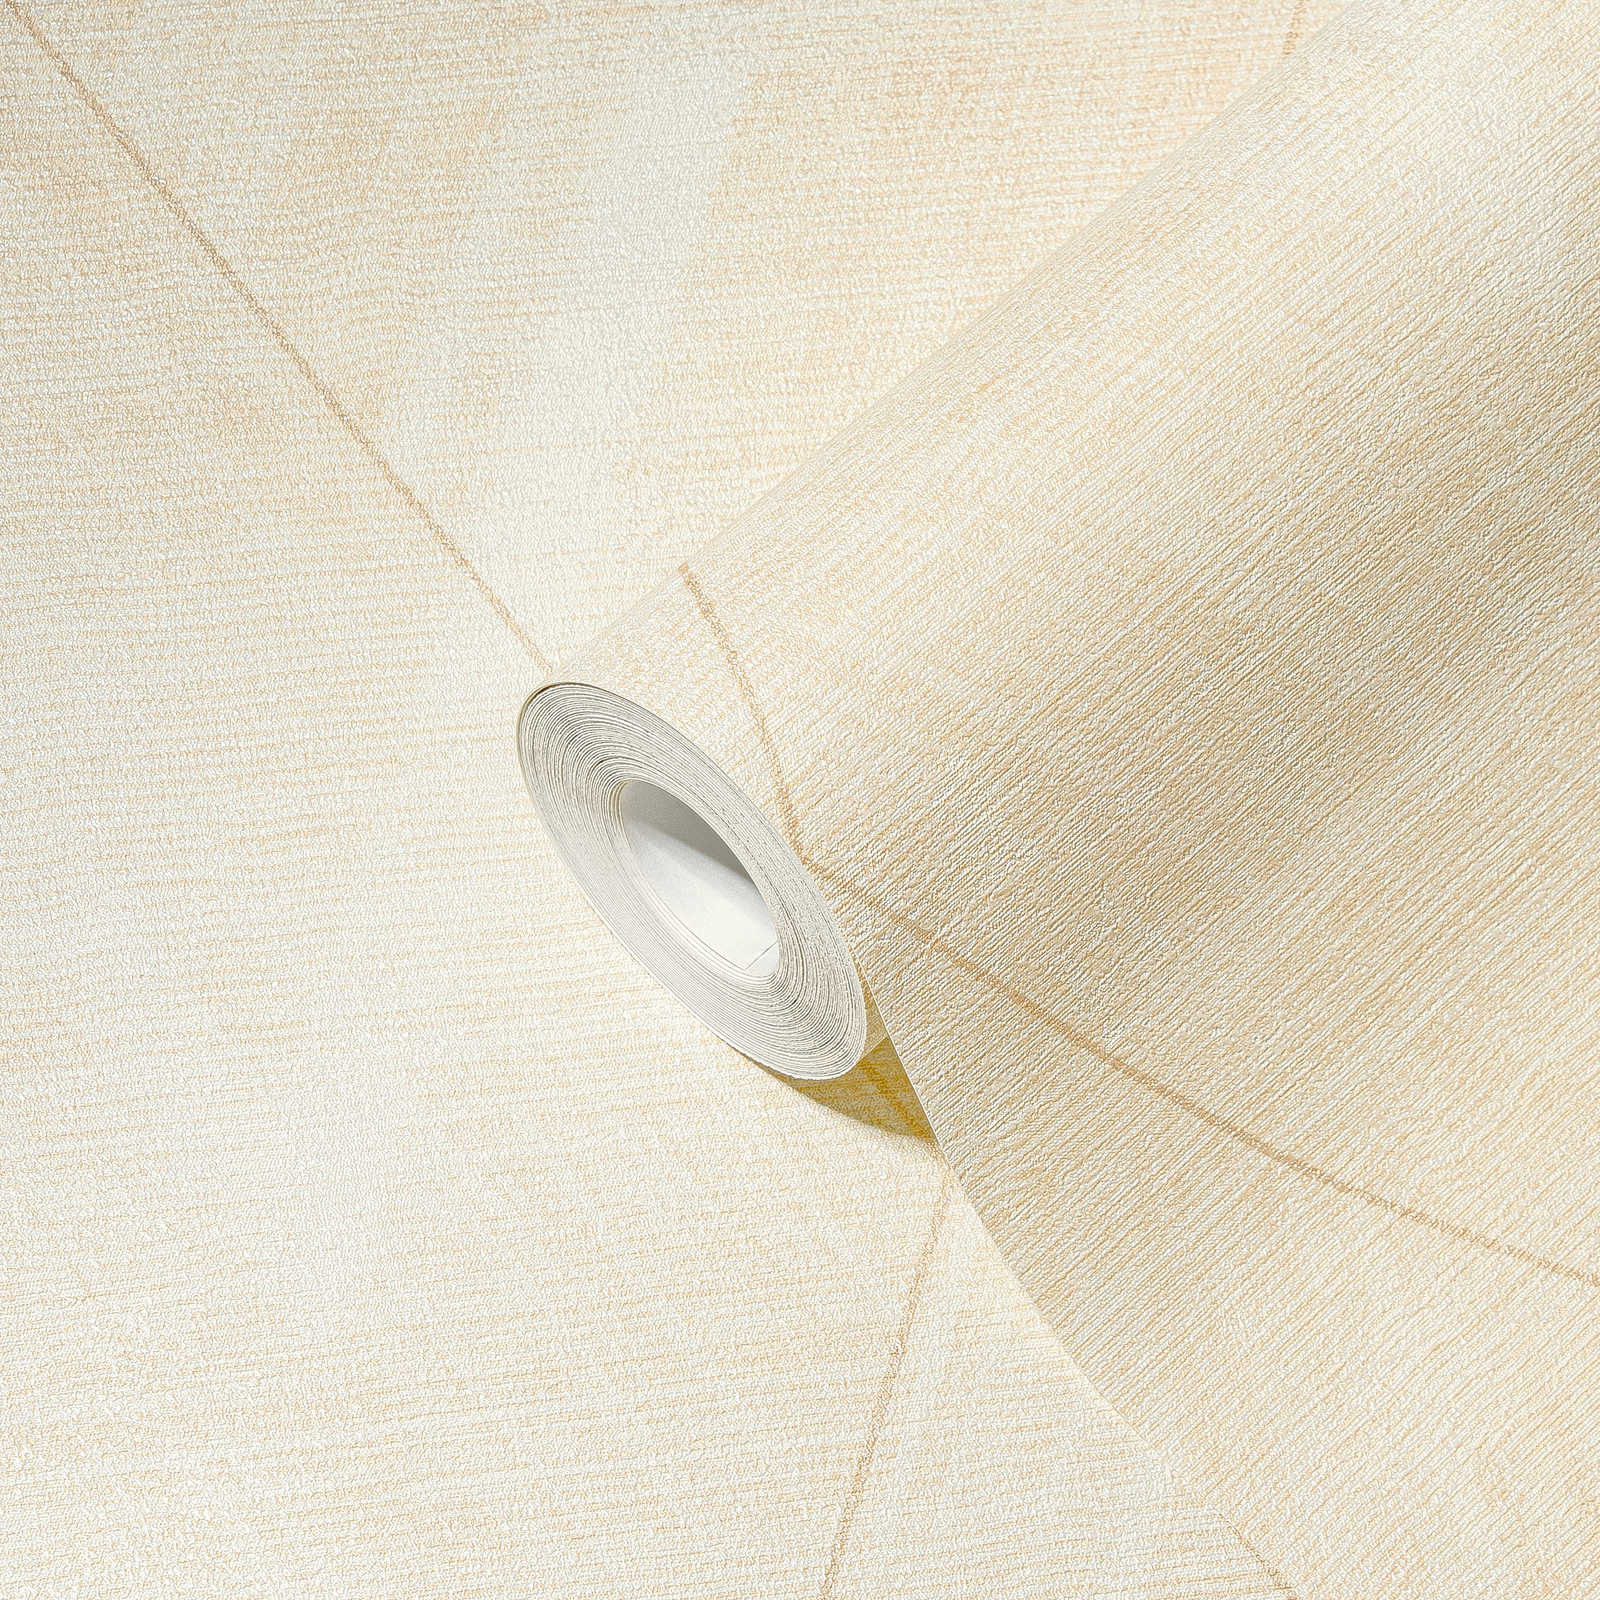             Papel pintado diamante con óptica textil - metálico, crema, amarillo
        